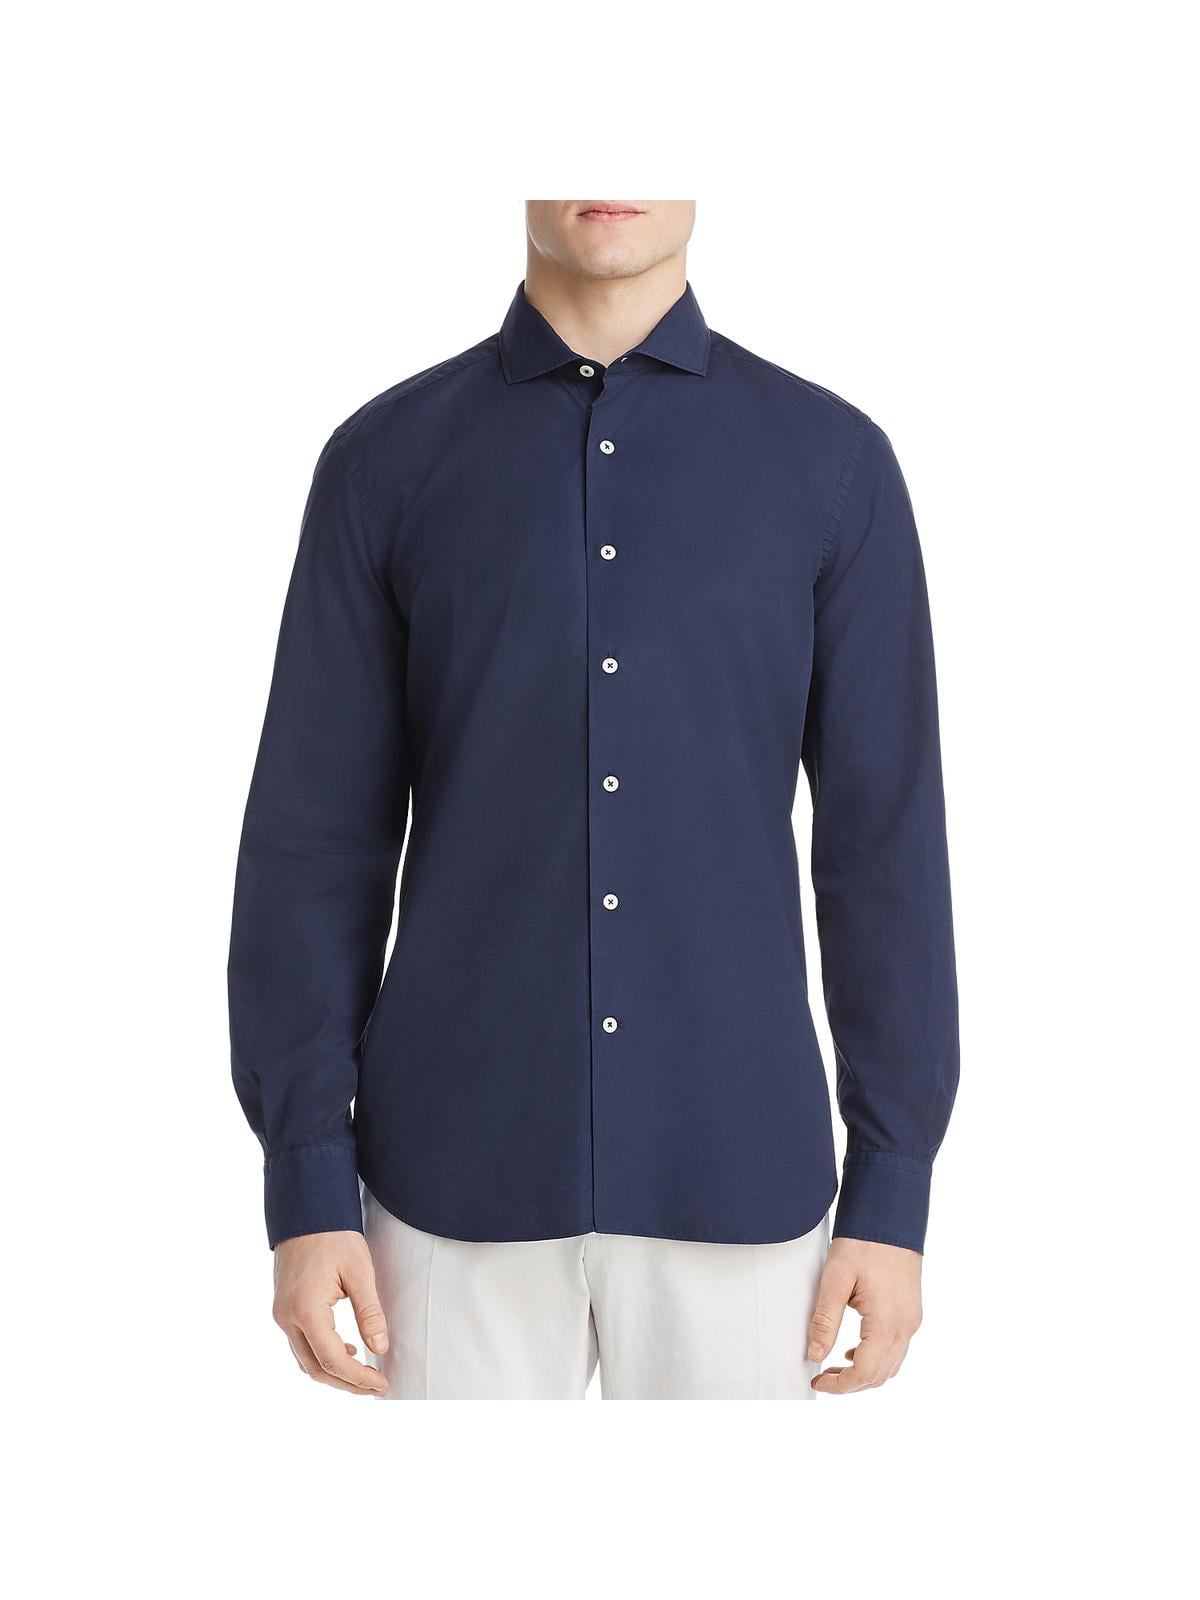 INC Mens Black Contrast Stitch Collar Button-Down Shirt Top XS BHFO 4583 